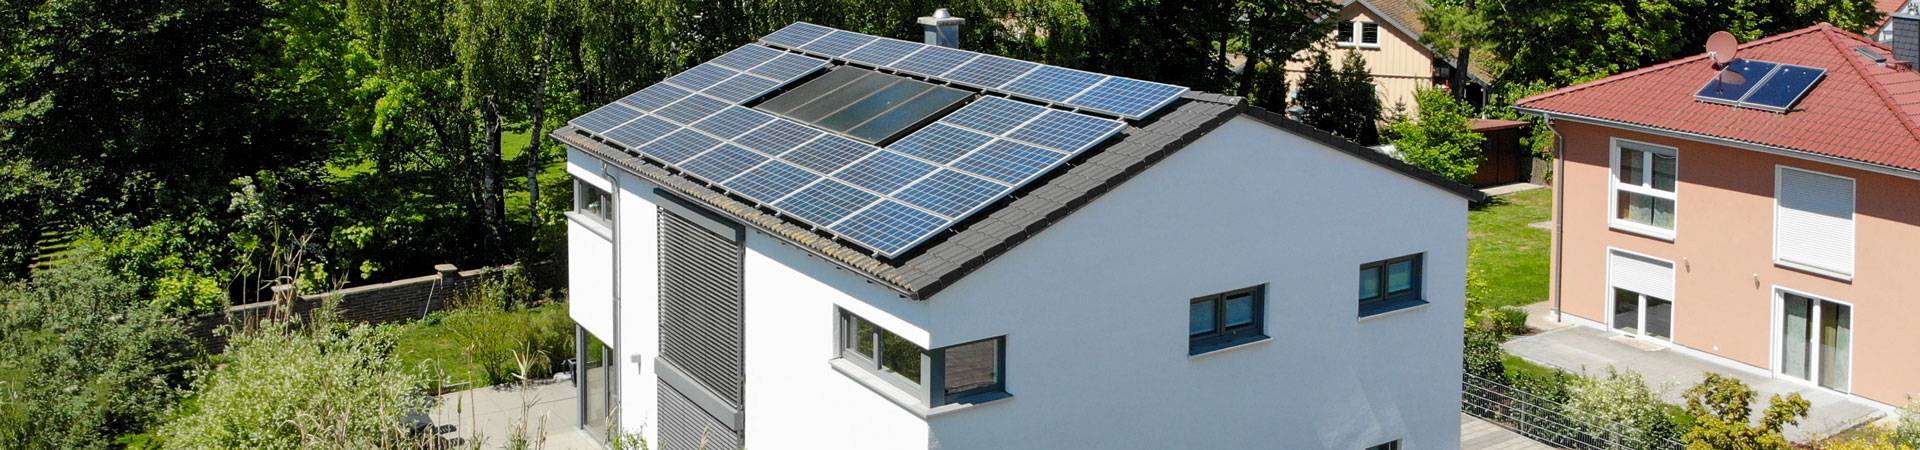 photovoltaik odenwald